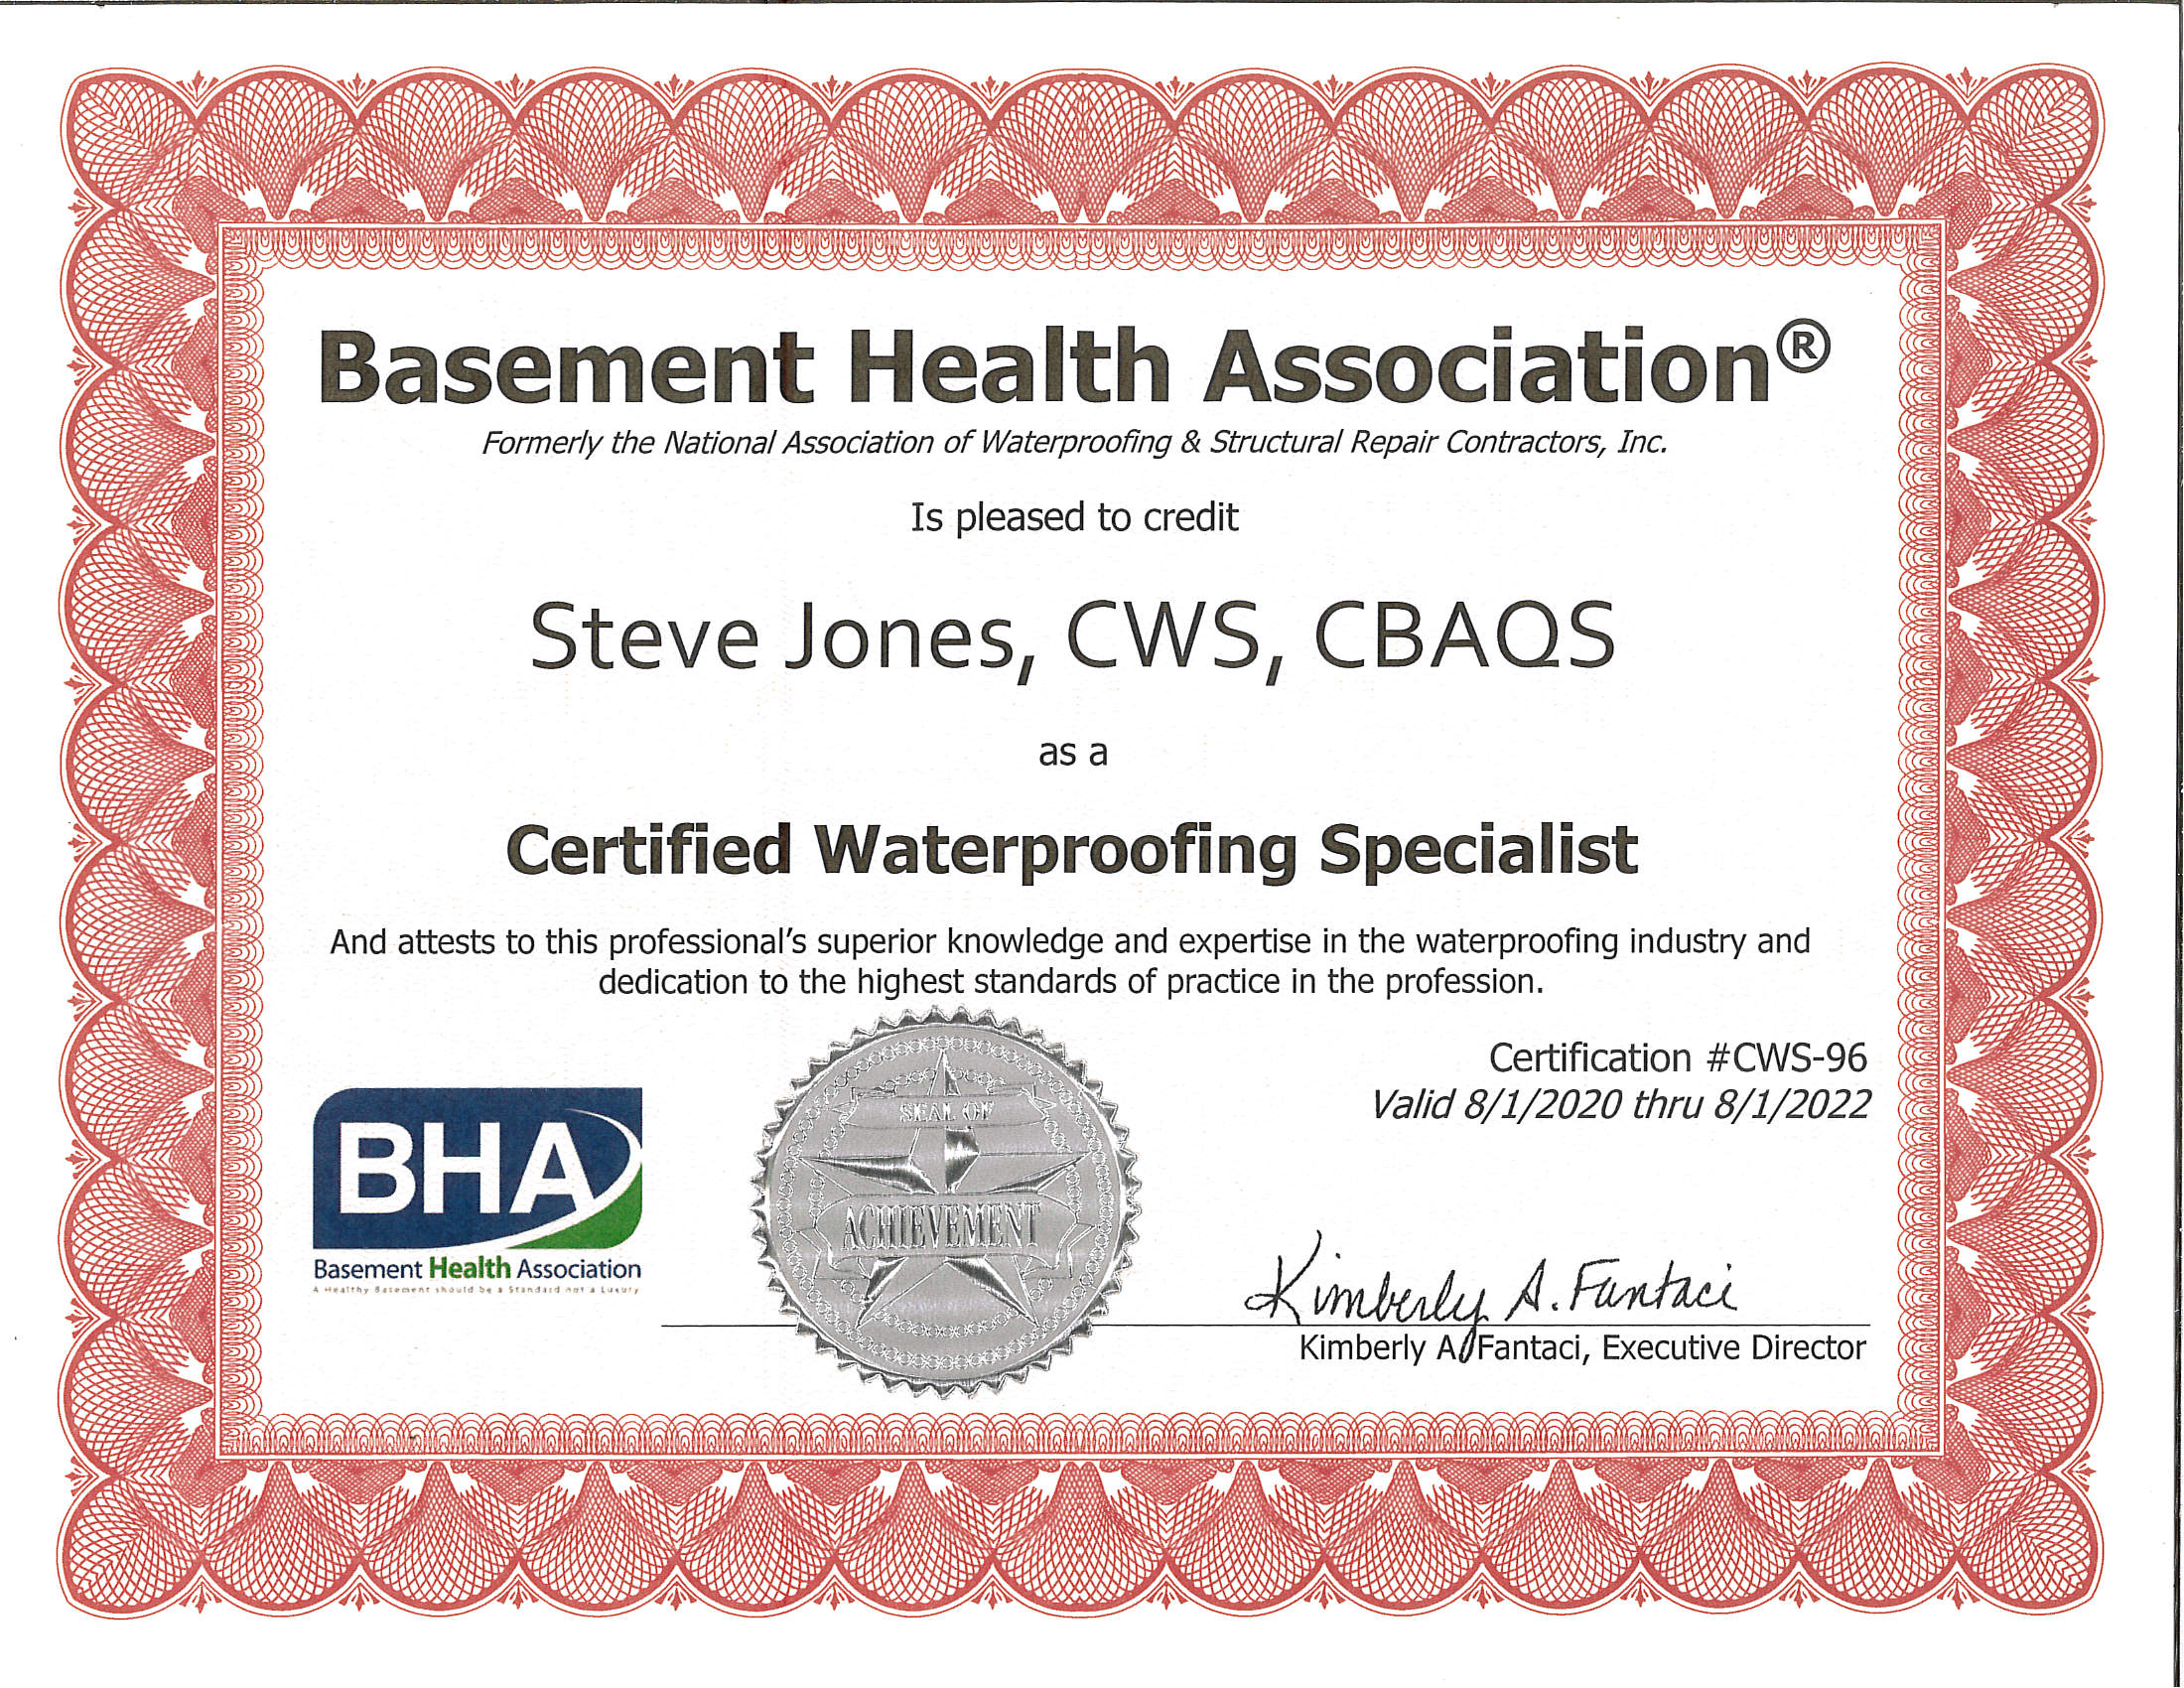 Certifed Waterproofing Specialist